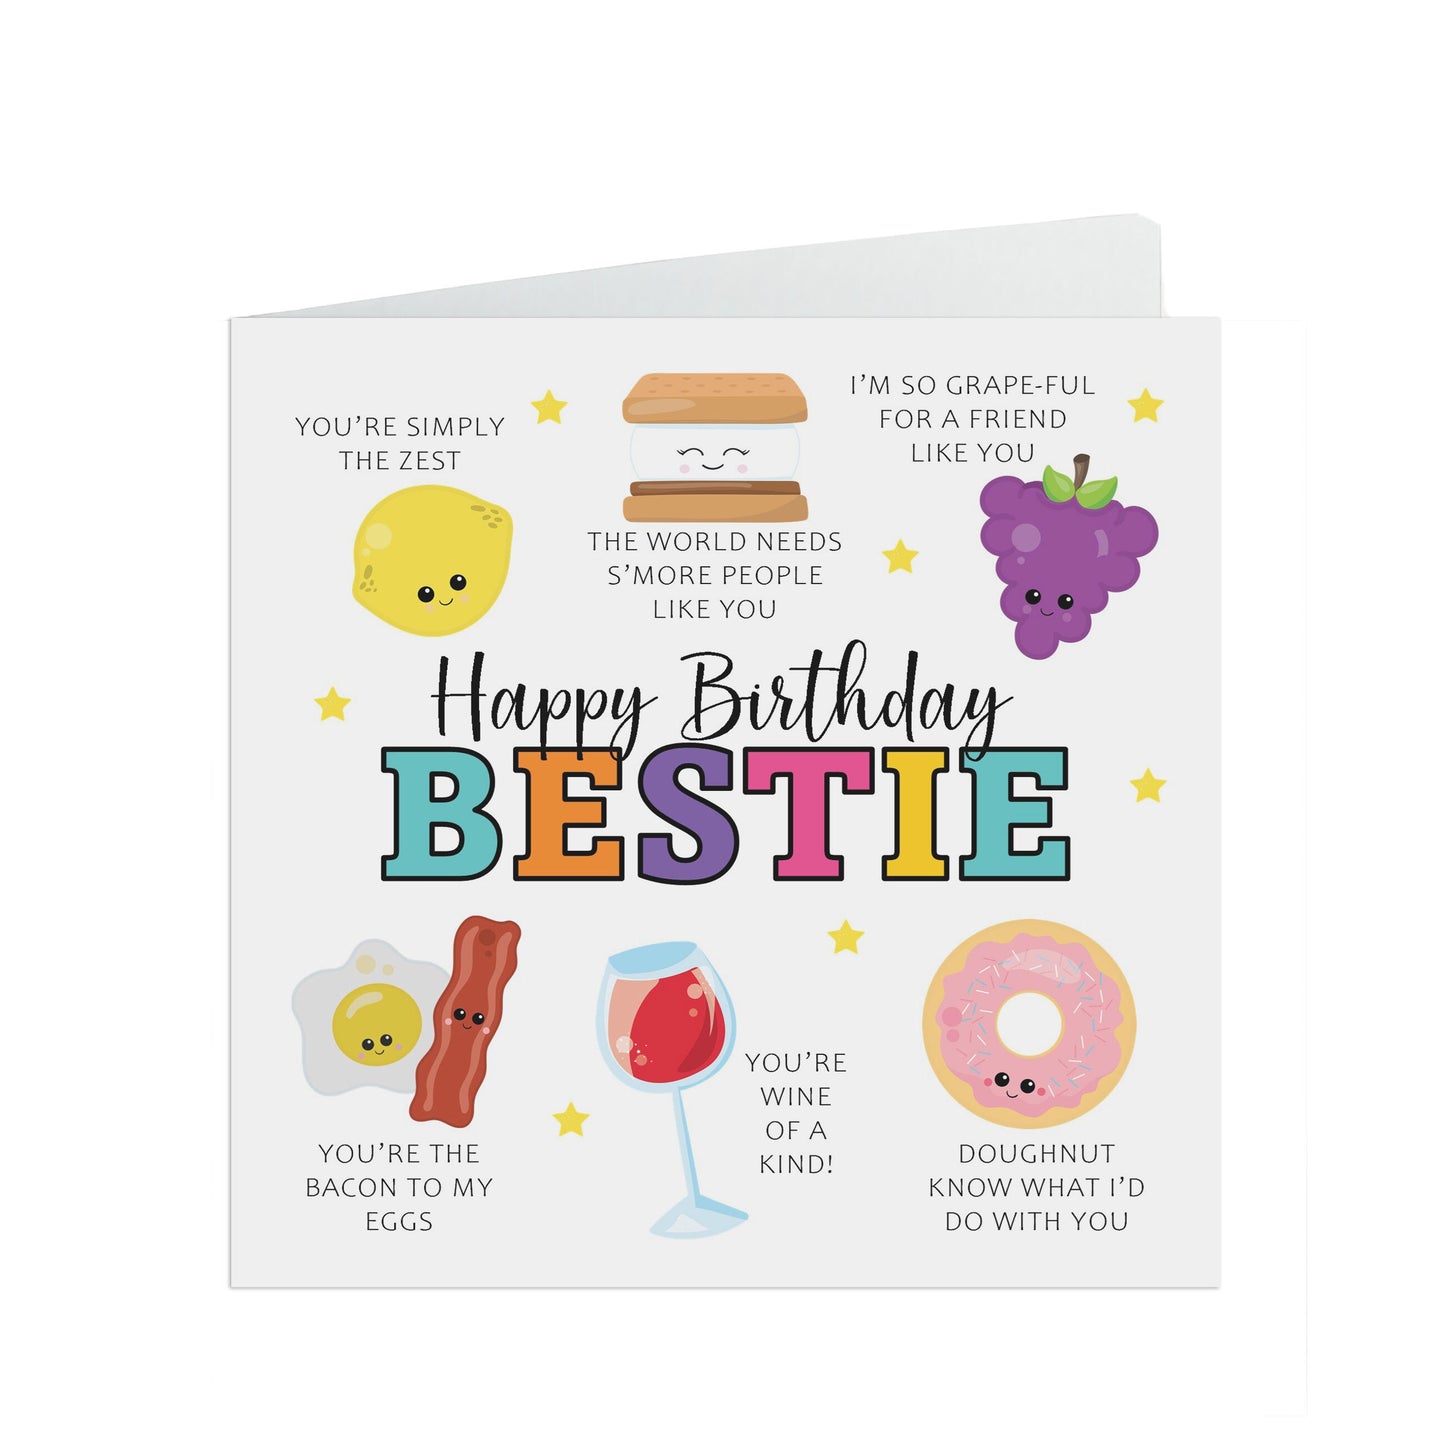 Bestie Birthday Card - Funny Pun Card For Best Friend